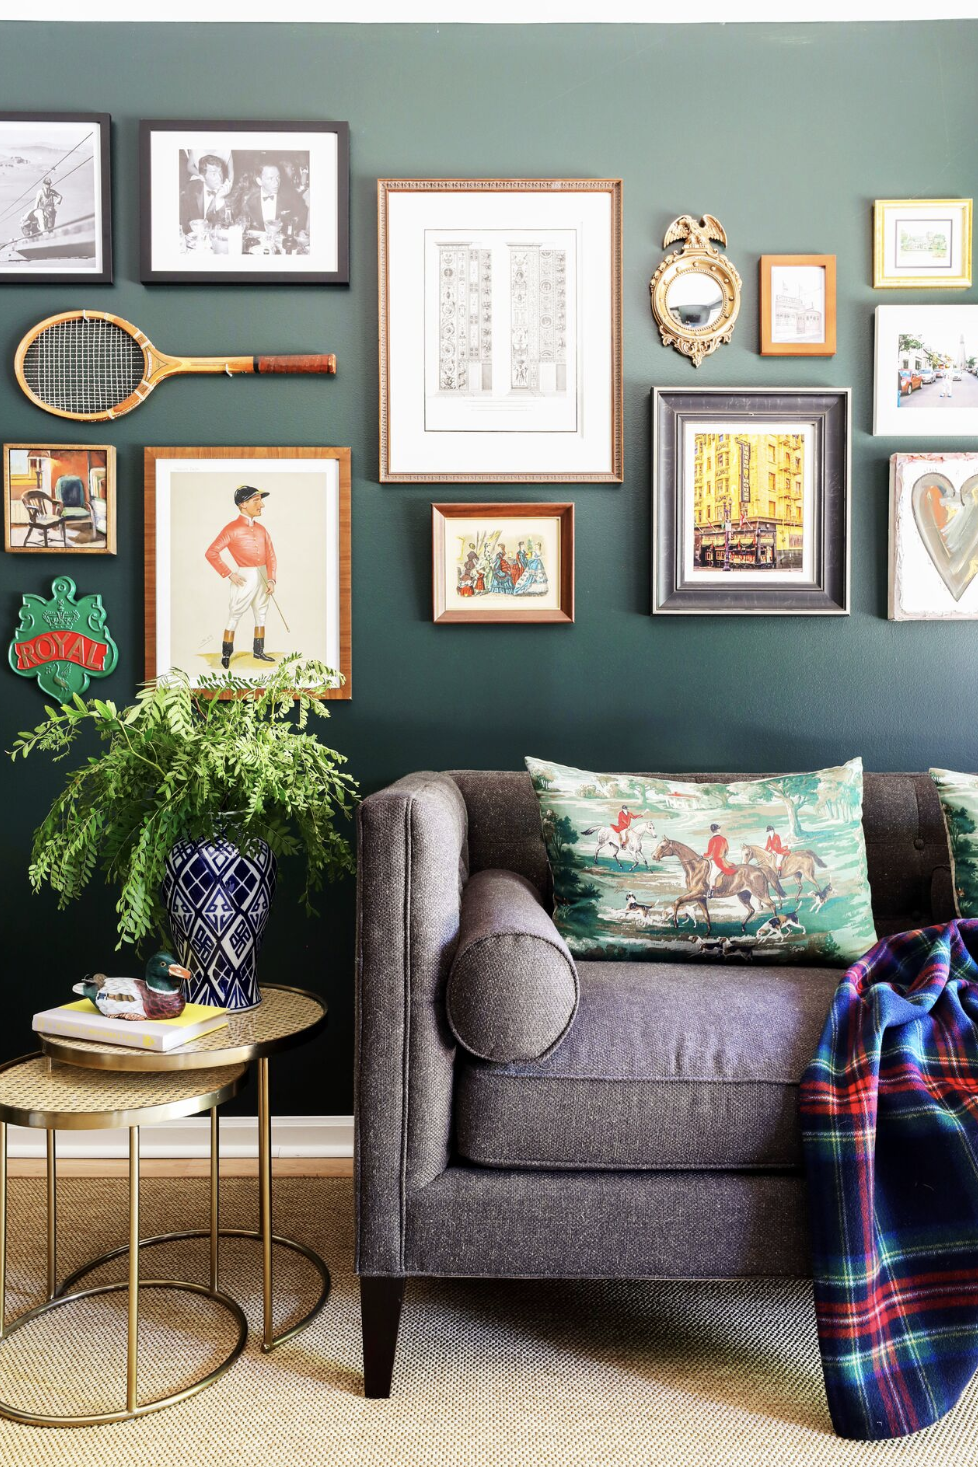 Cool diy painting ideas  Pinterest room decor, Room inspiration